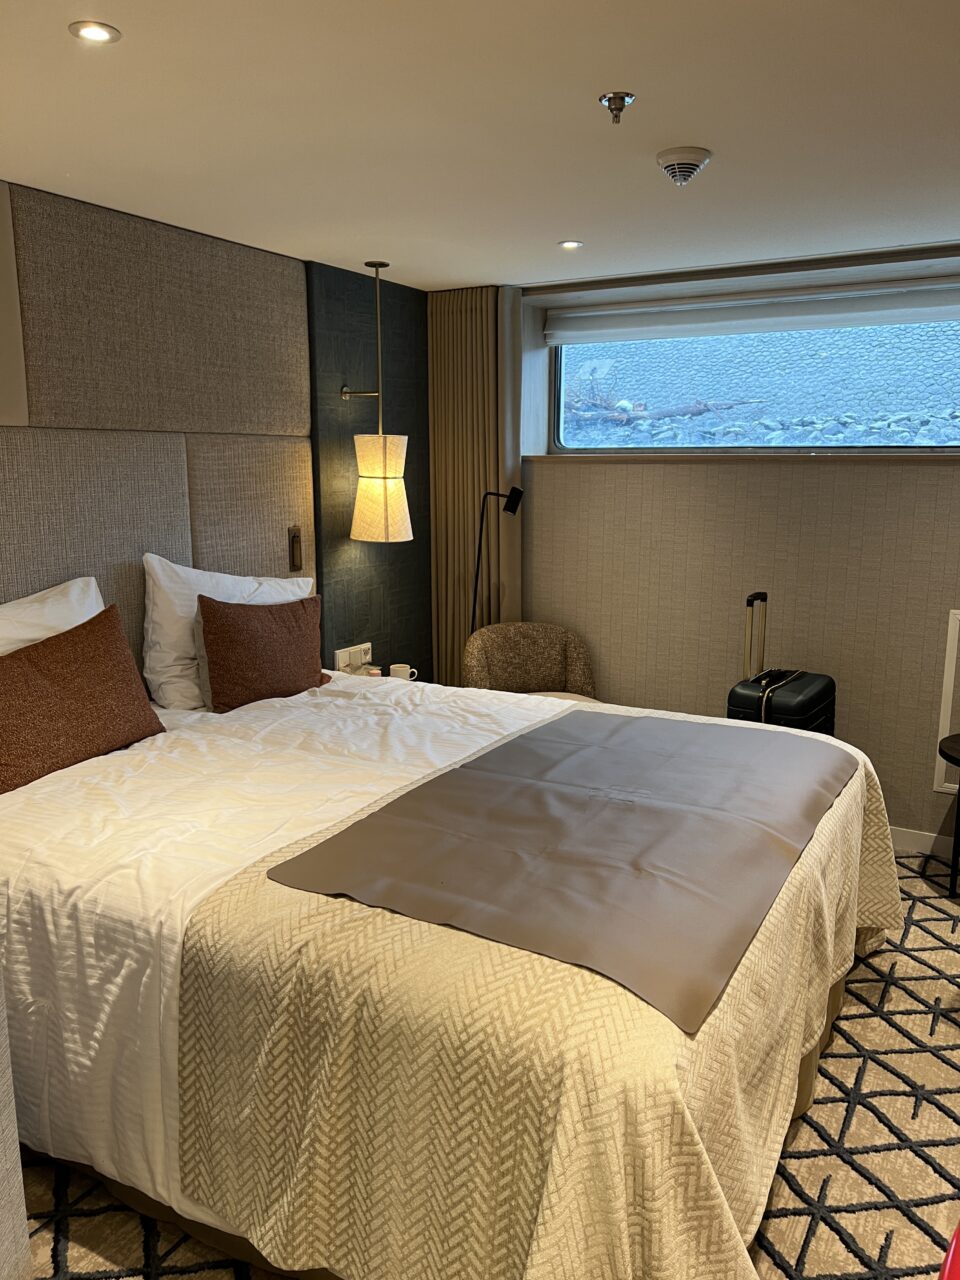 Lugar med seng og avlangt vindu bord elvecruiseskipet MS Viva Two. Foto